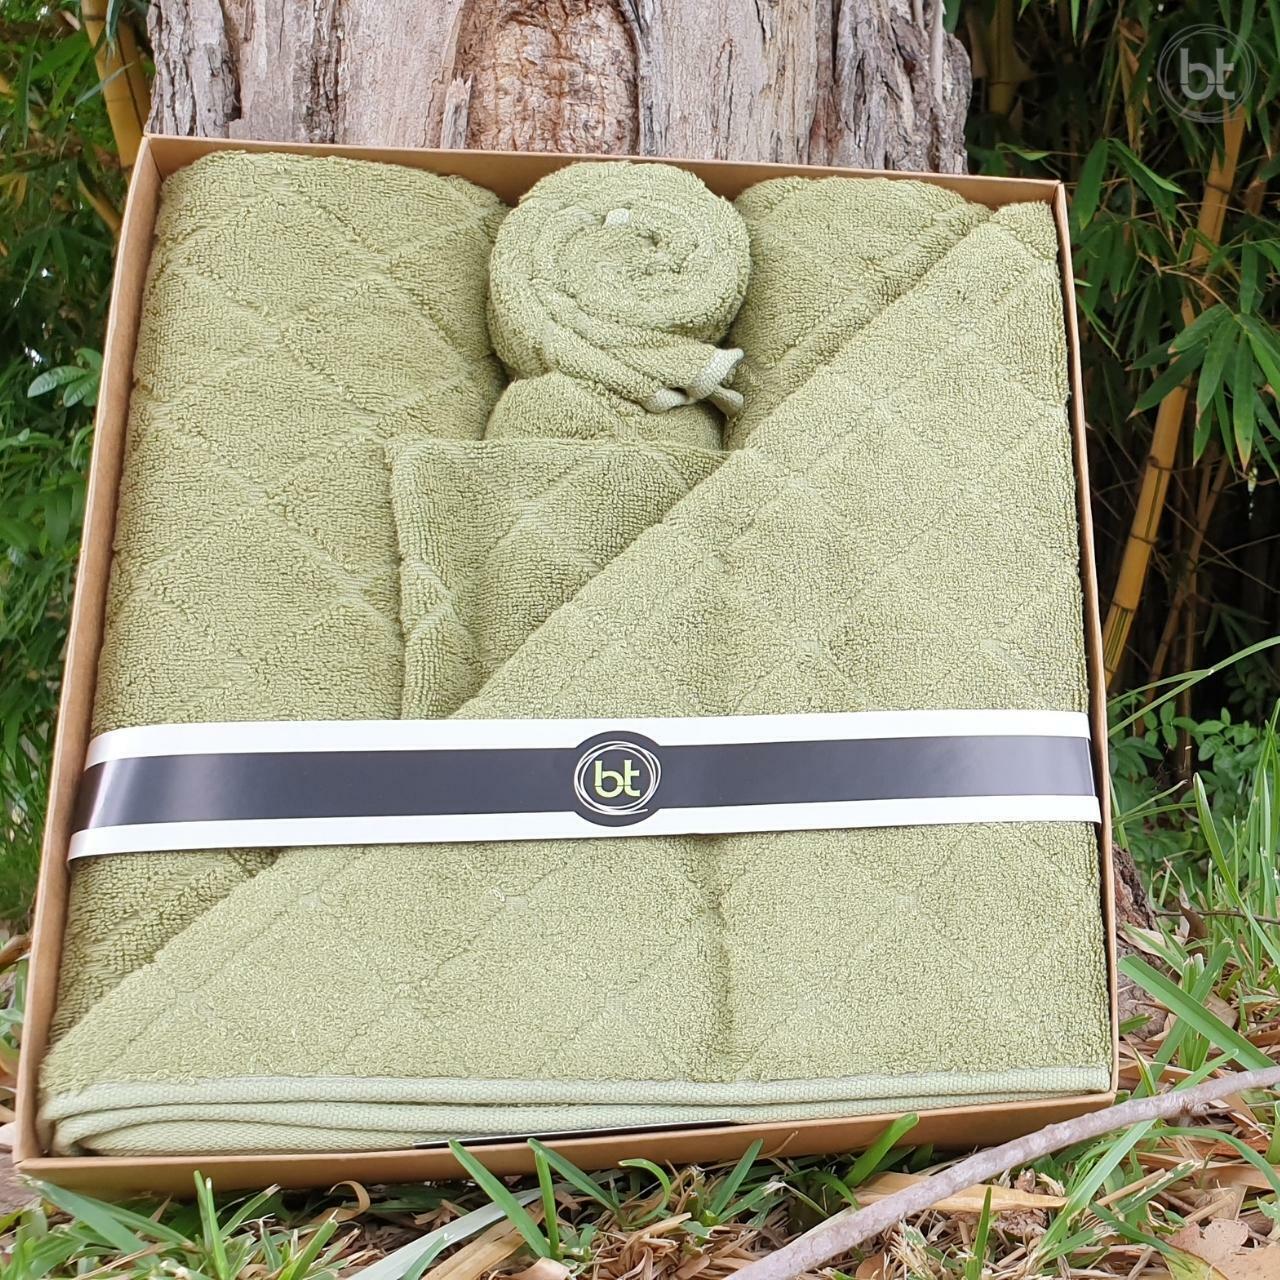 Luxury Bamboo Towel Packs